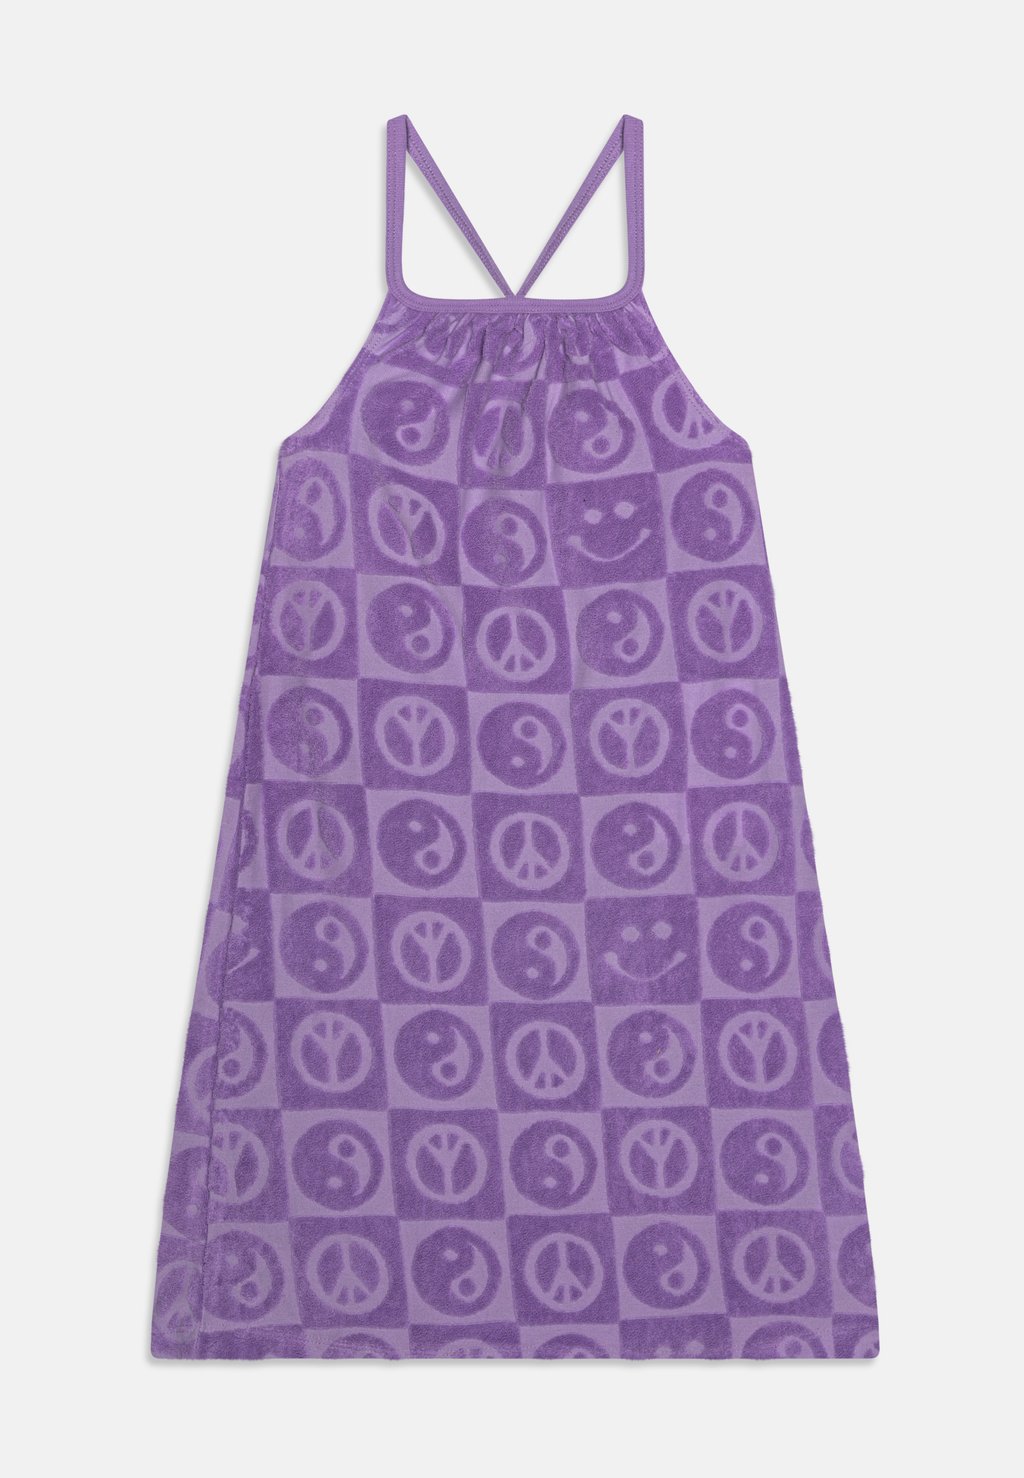 платье из джерси cusanna molo цвет sea shell Платье из джерси Charming Dress Molo, цвет viola